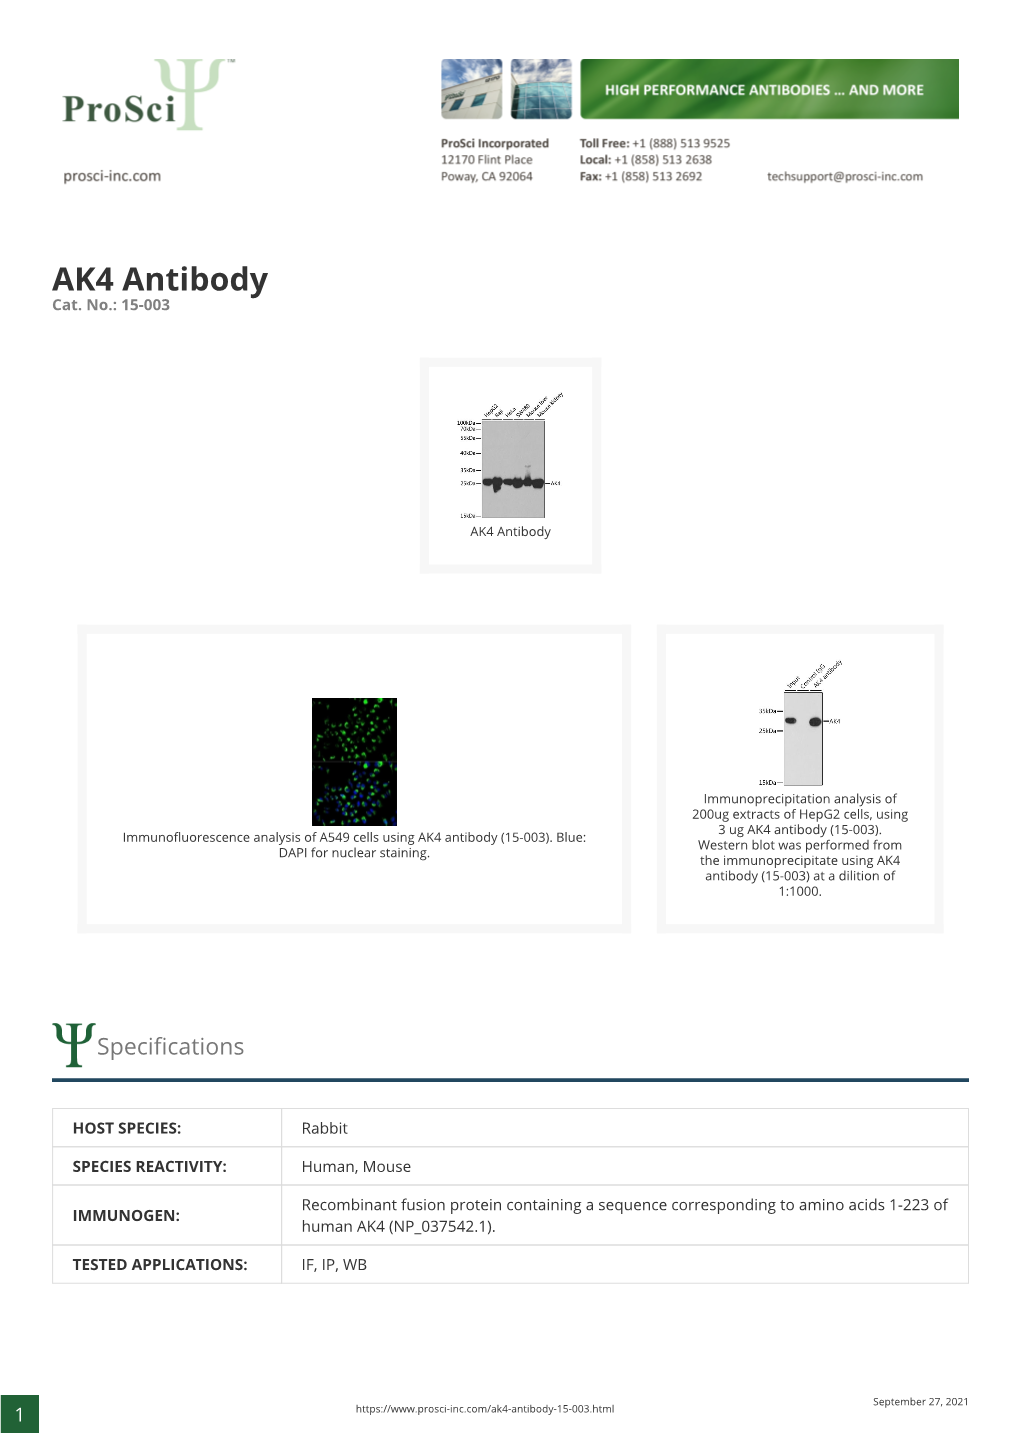 AK4 Antibody Cat